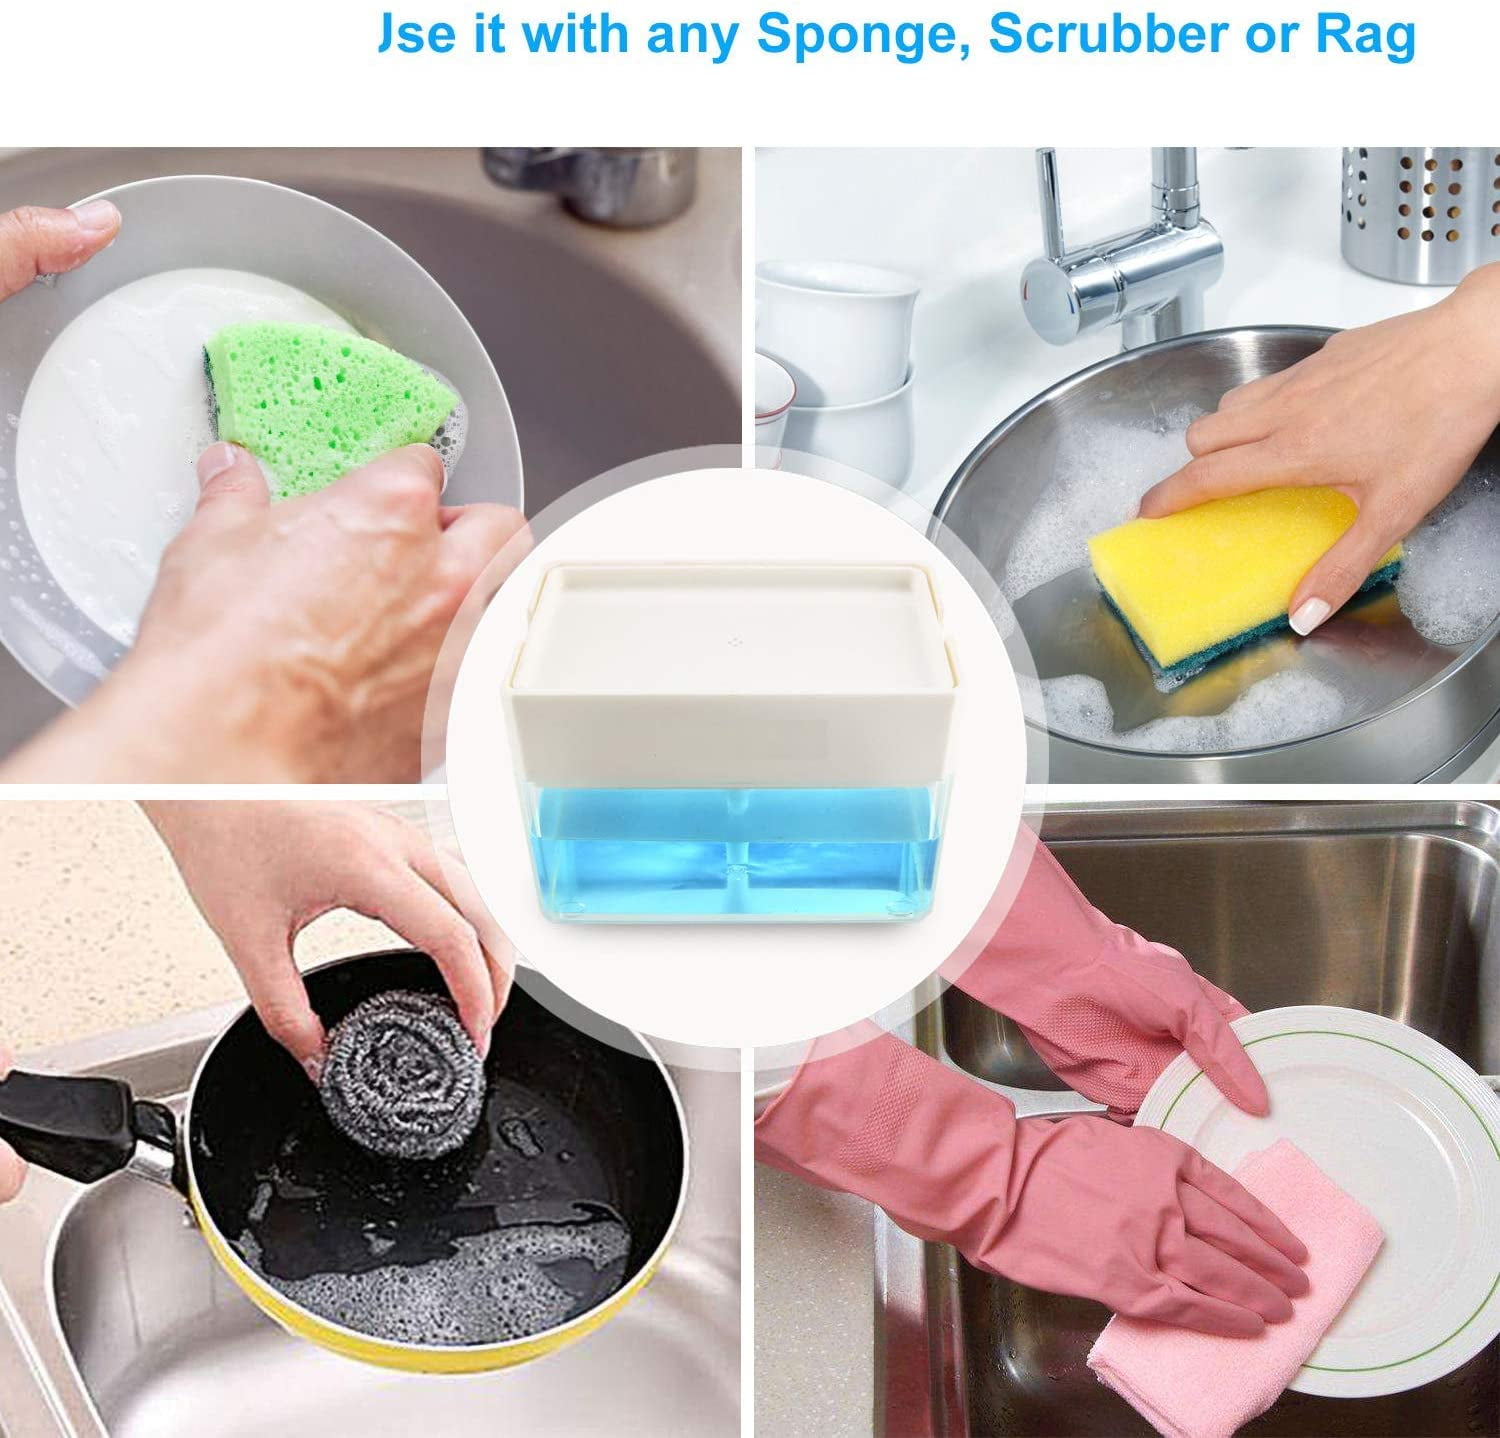 Aqwzh Innovative Sponge Holder 2 in1 Countertop Plastic Soap & Lotion Dispenser Caddy